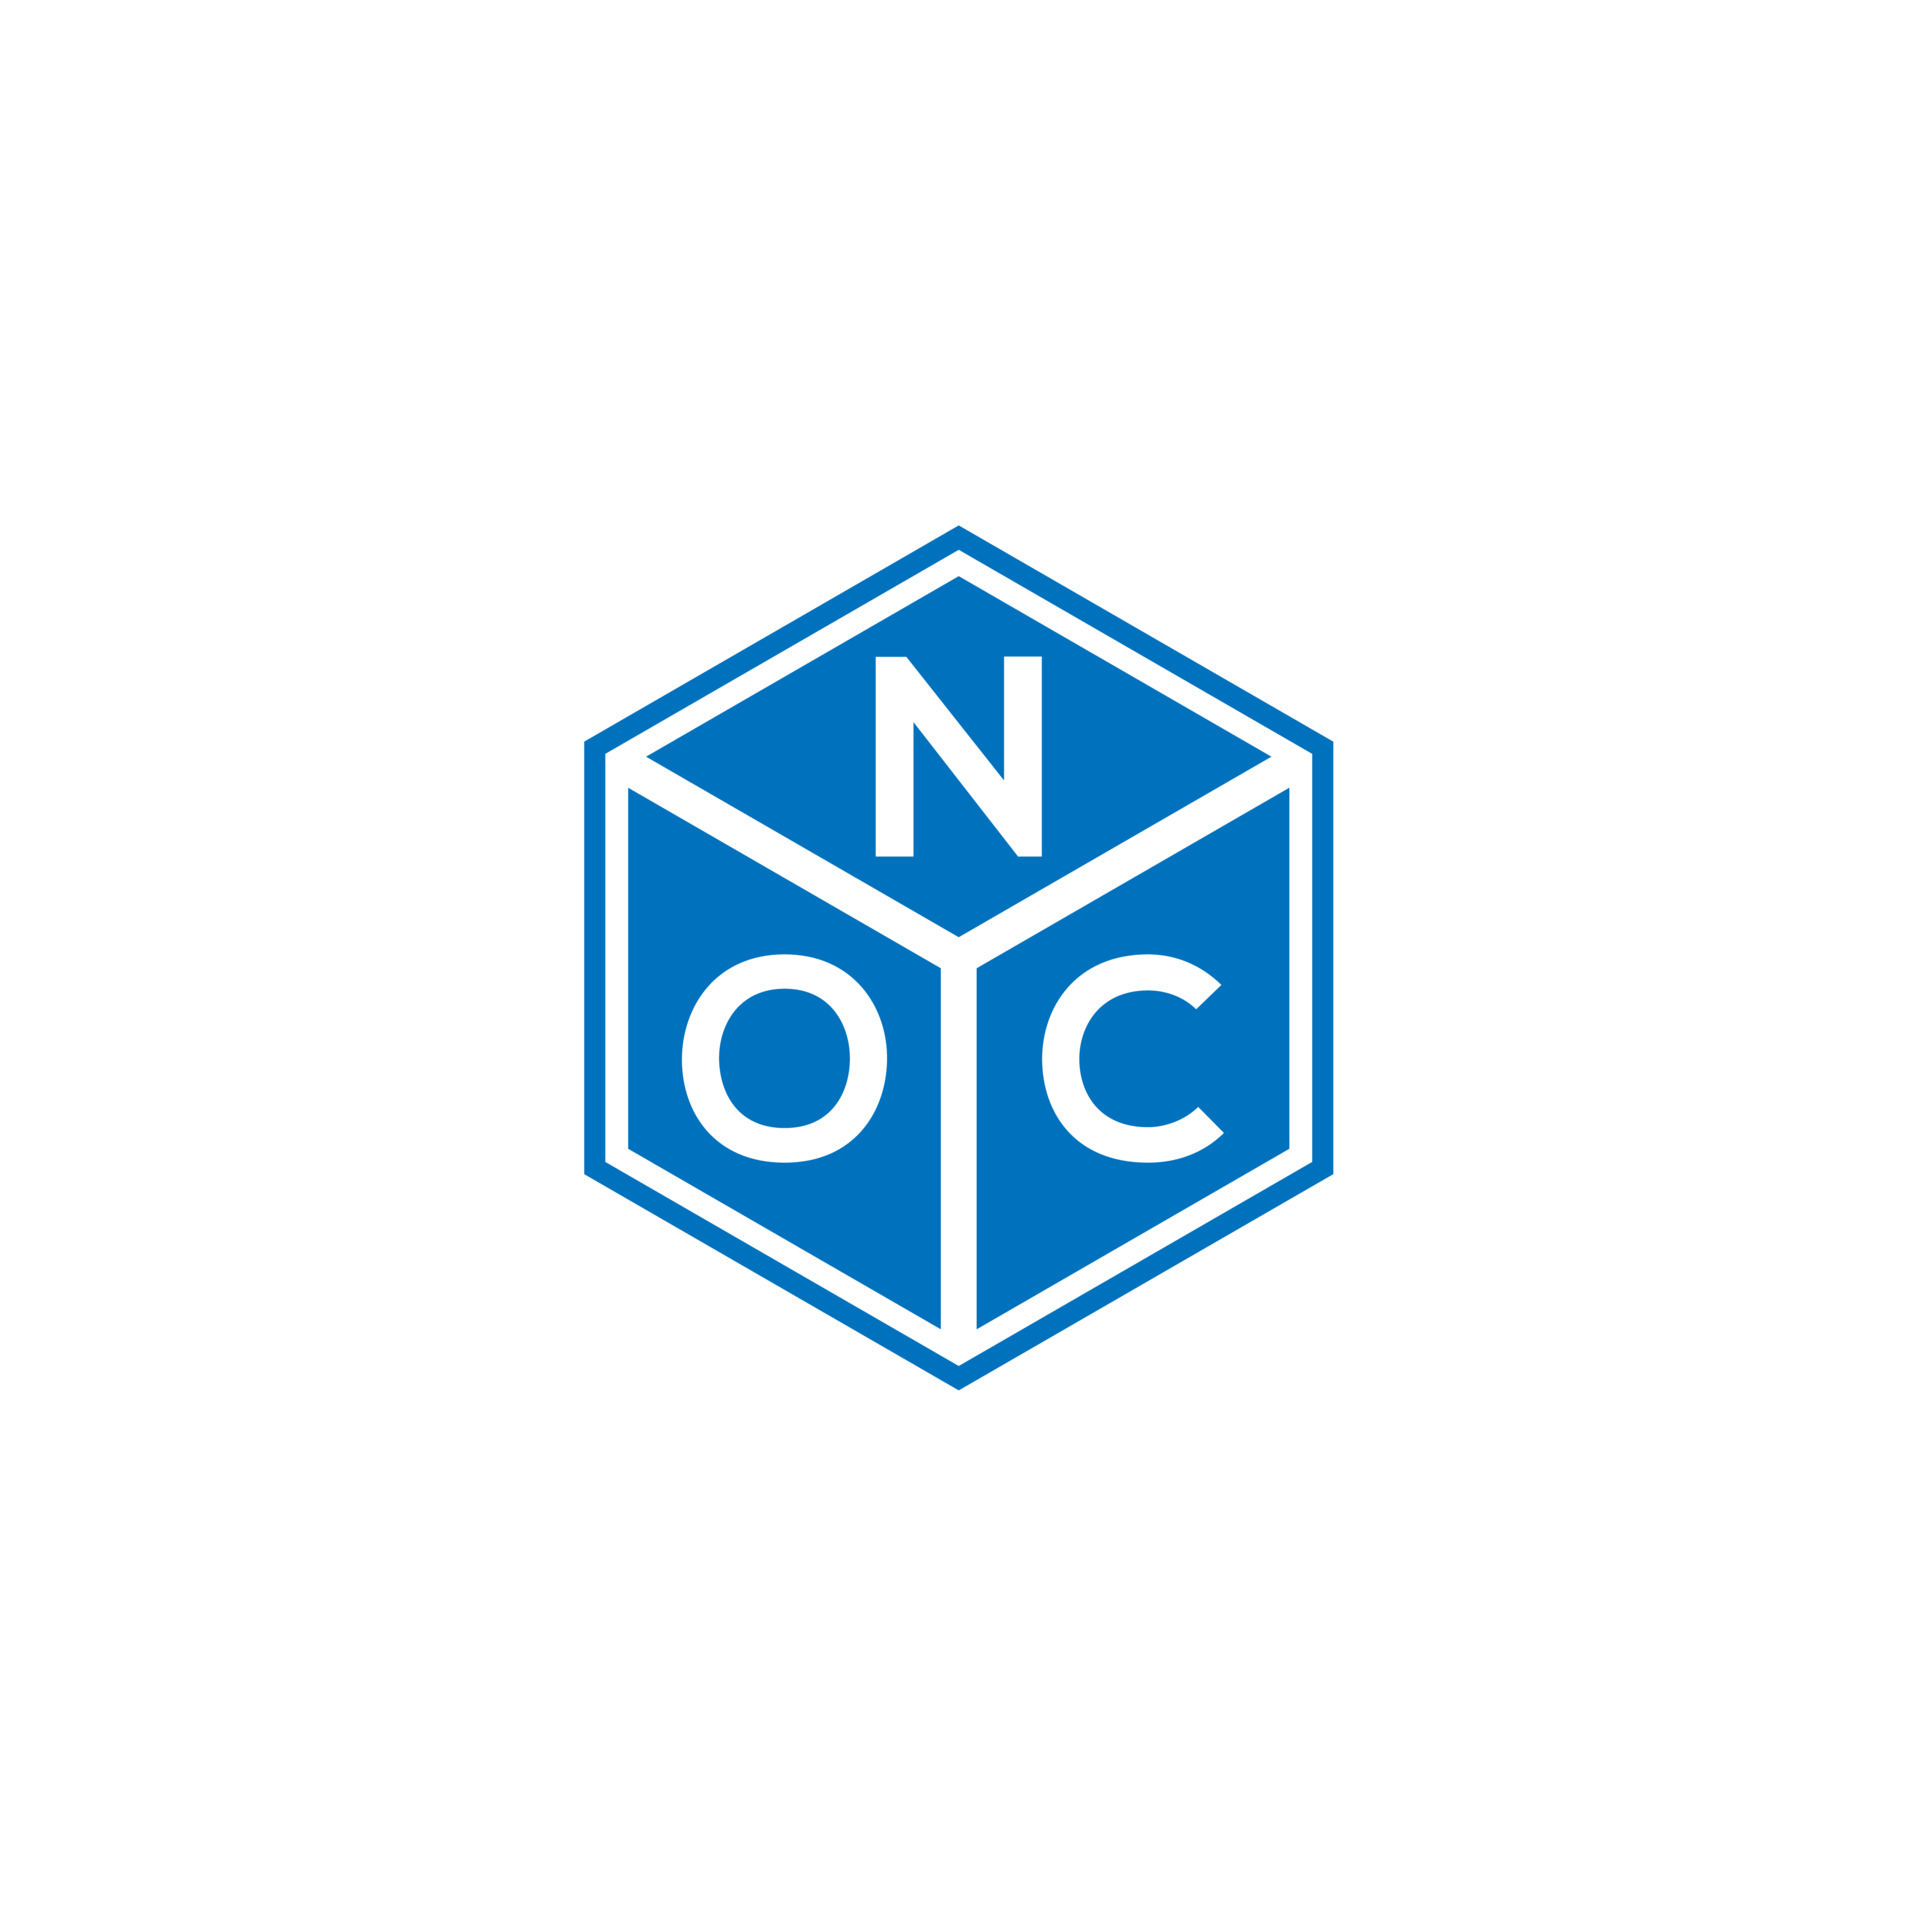 Mongolia NOC unveil new logo to mark 65-year anniversary